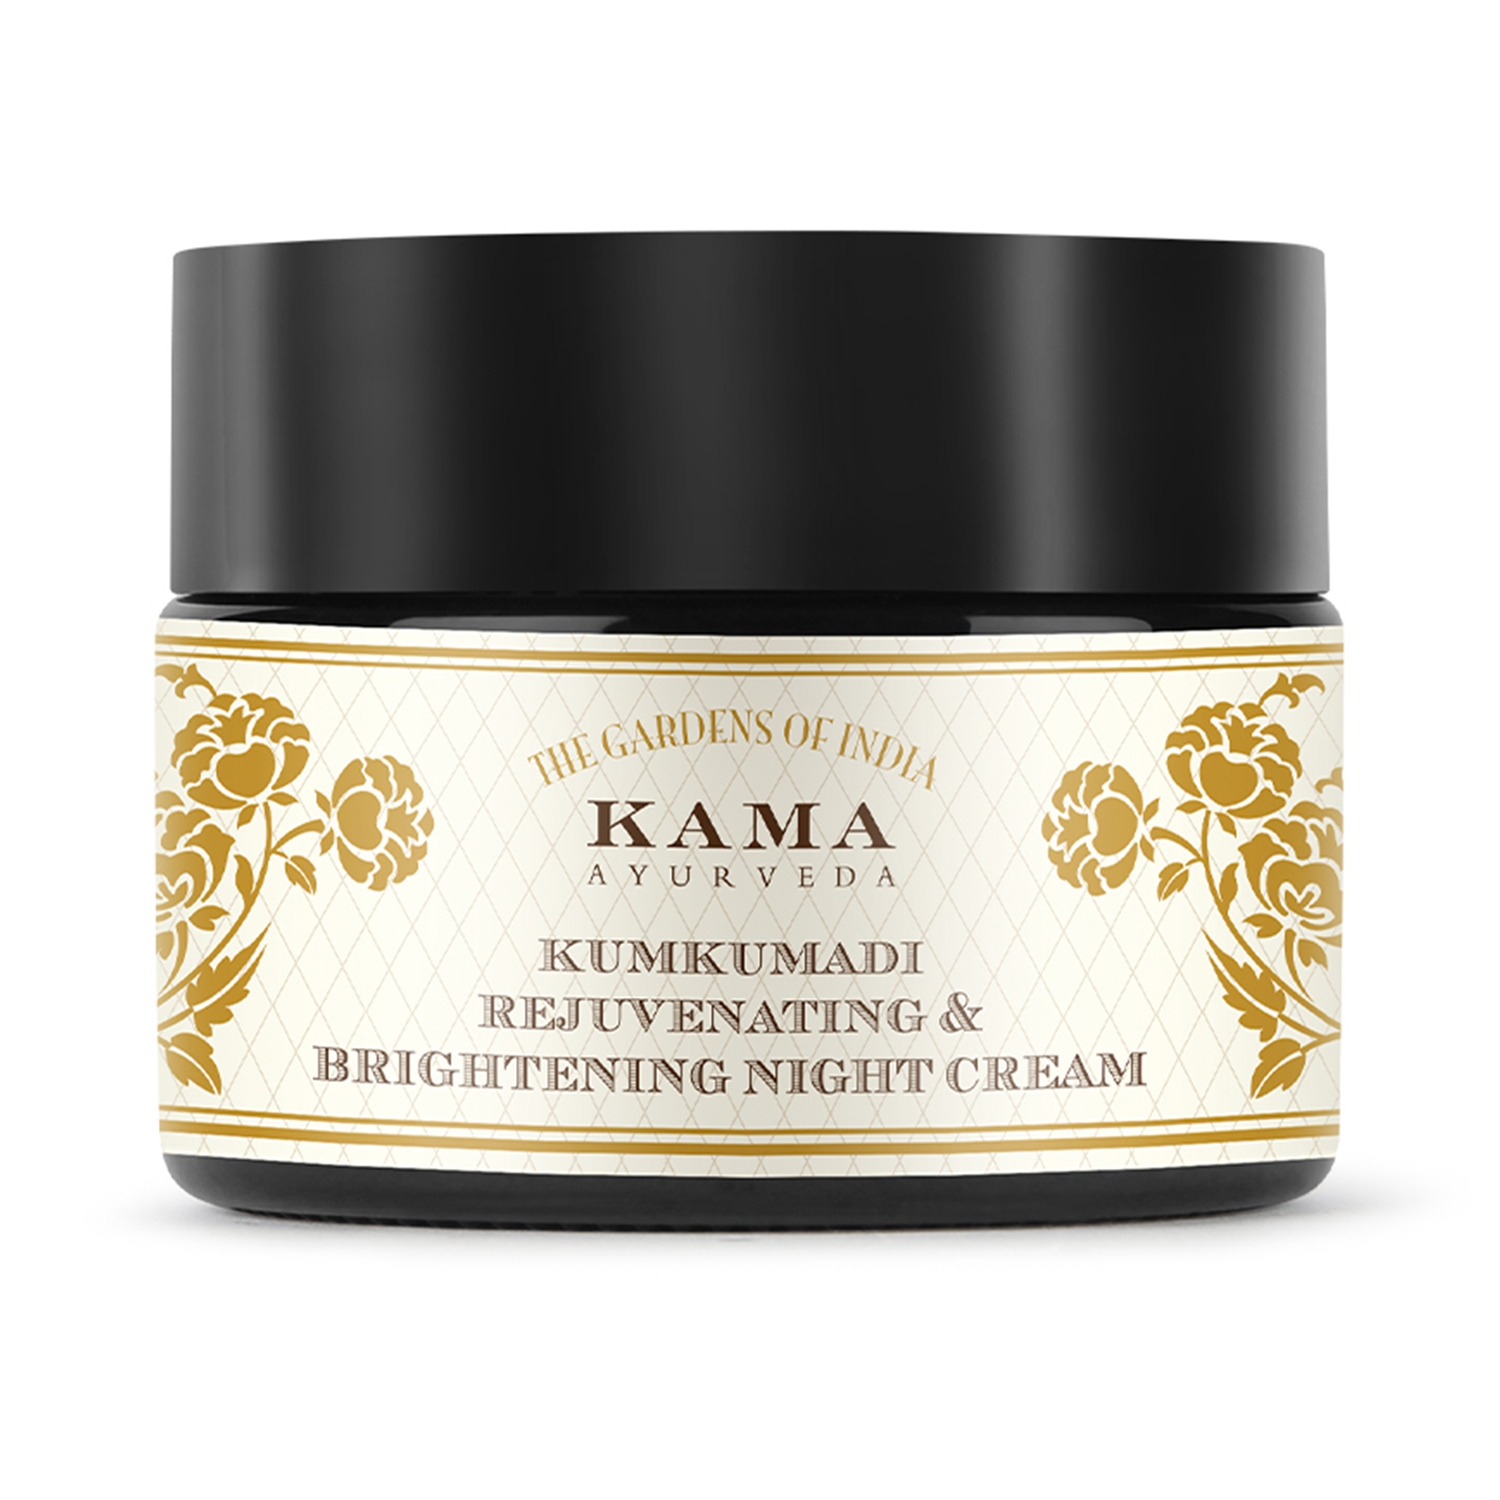 Kama Ayurveda Rejuvenating and Brightening Night Cream (50g)